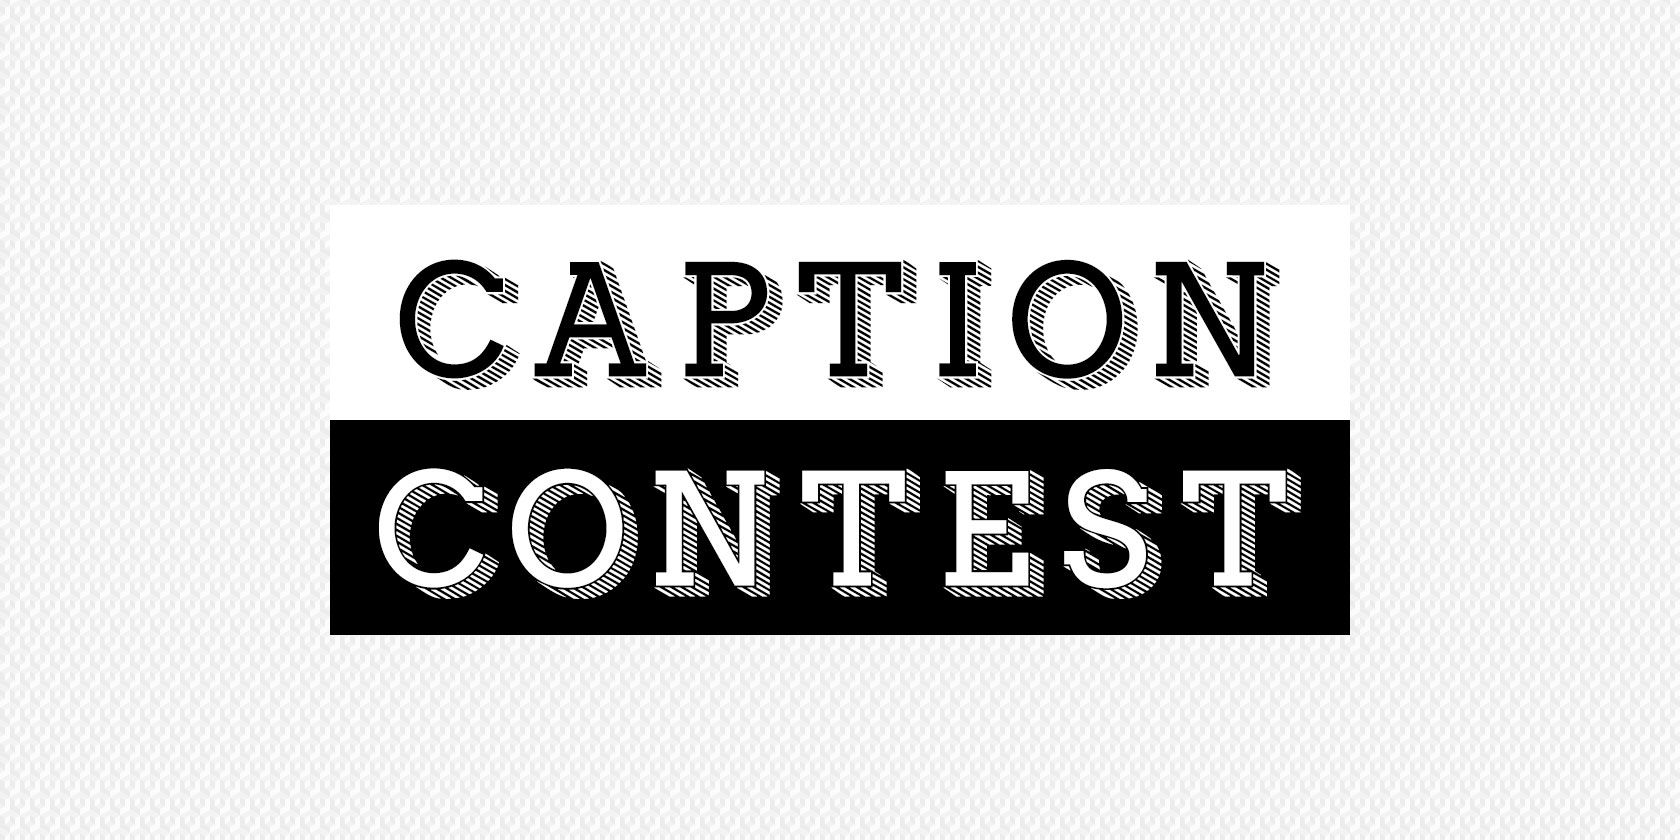 caption contest